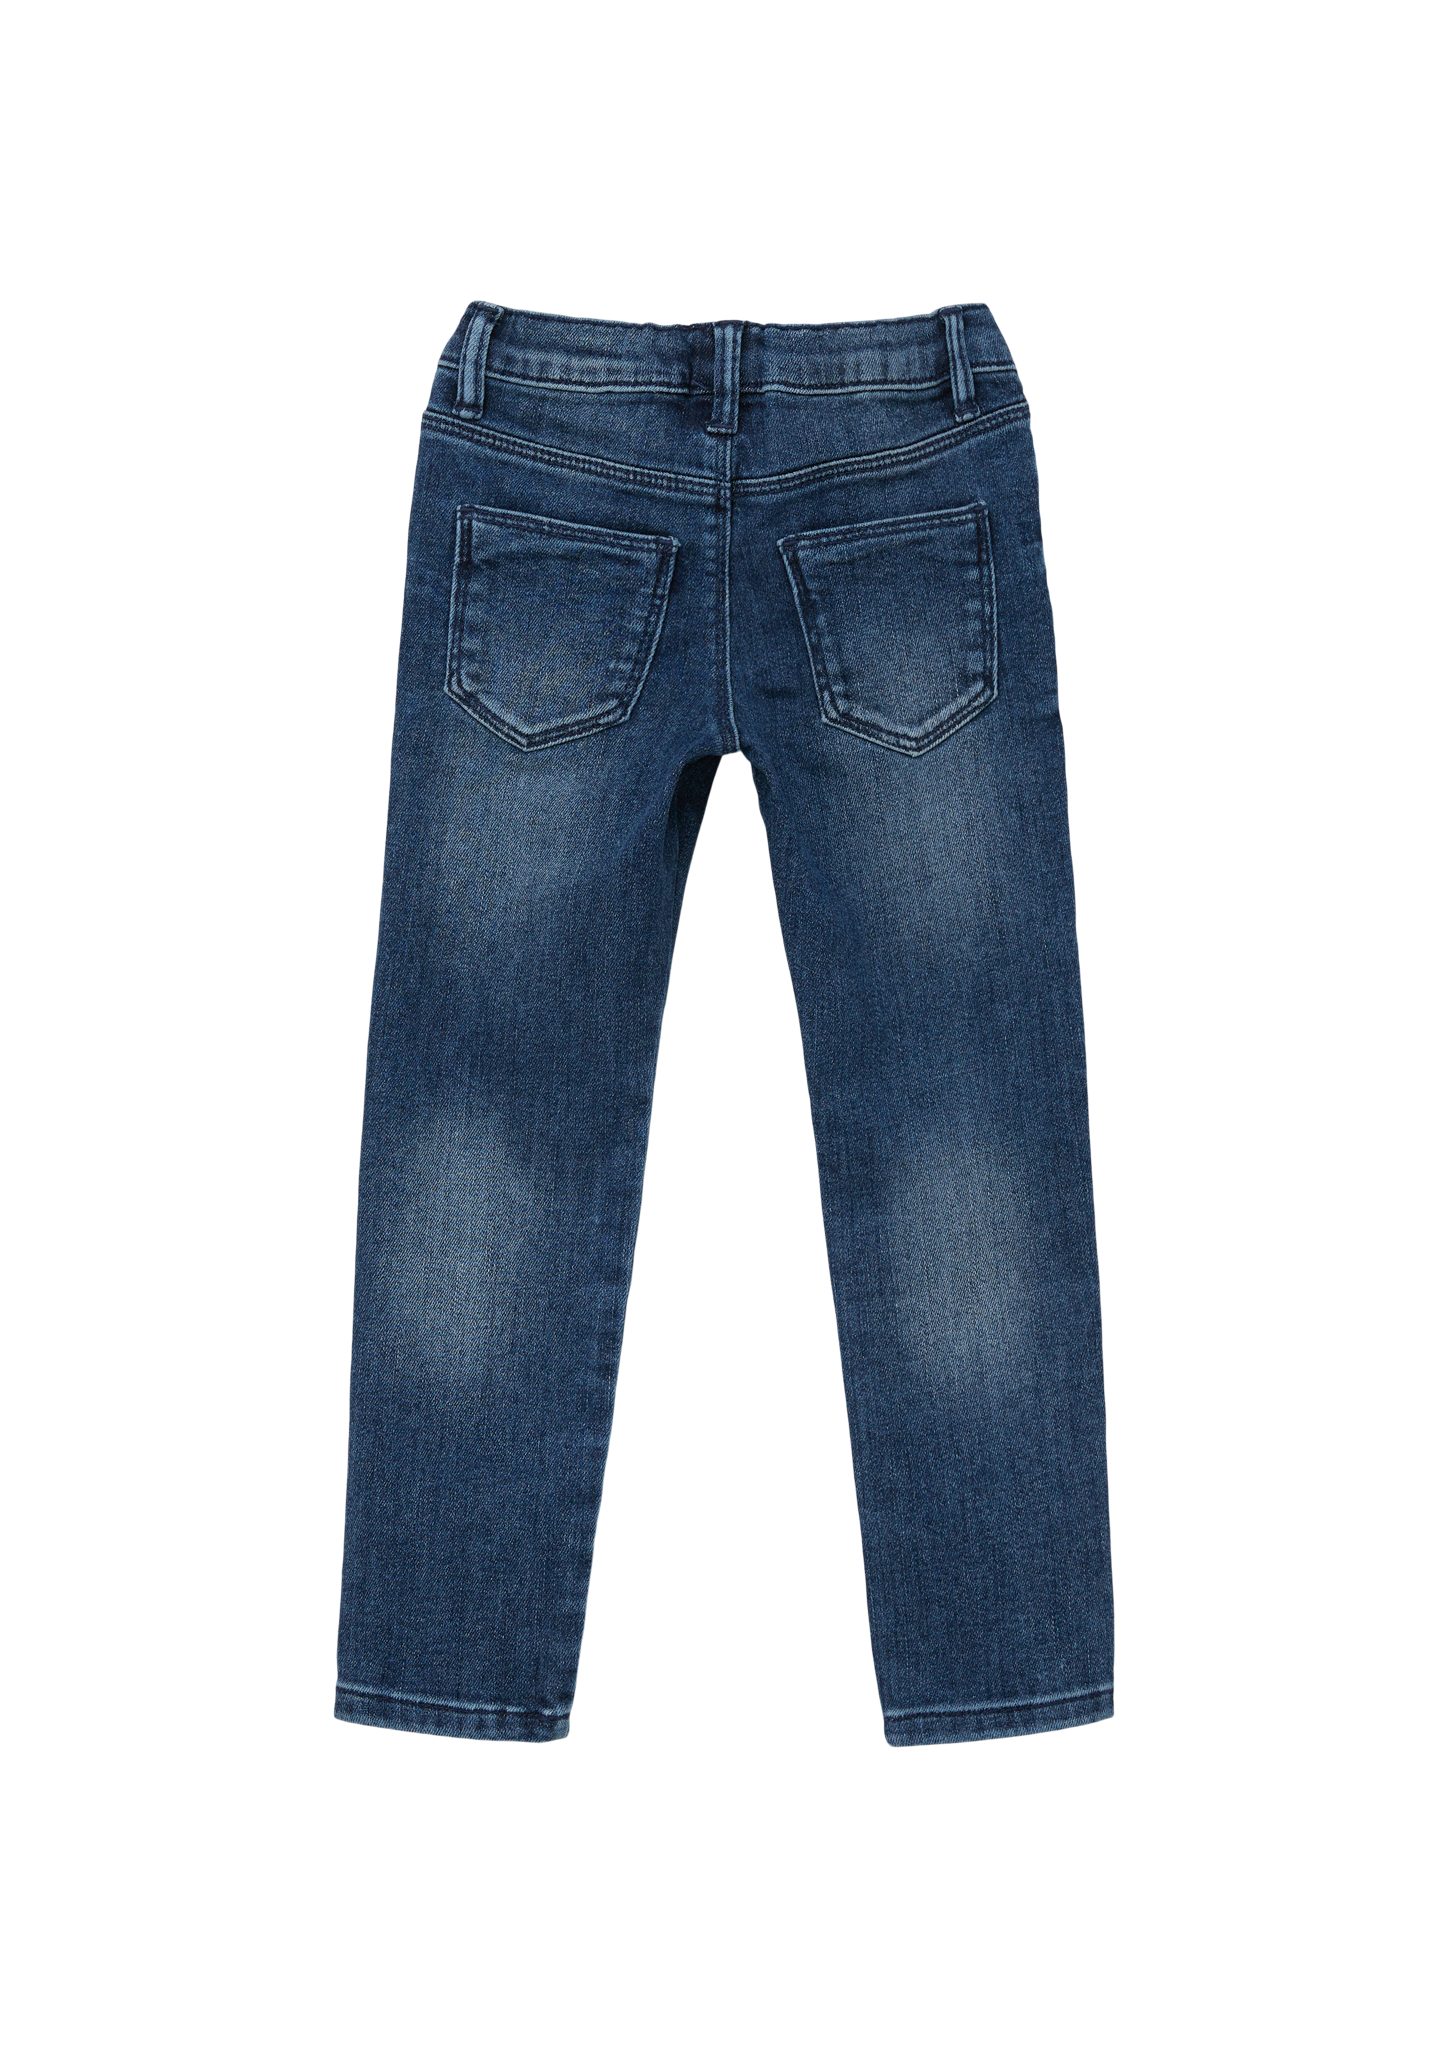 s.Oliver Stoffhose Jeans Fit Waschung / / / Mid Elastikbund Slim Leg Slim Treggings / Rise